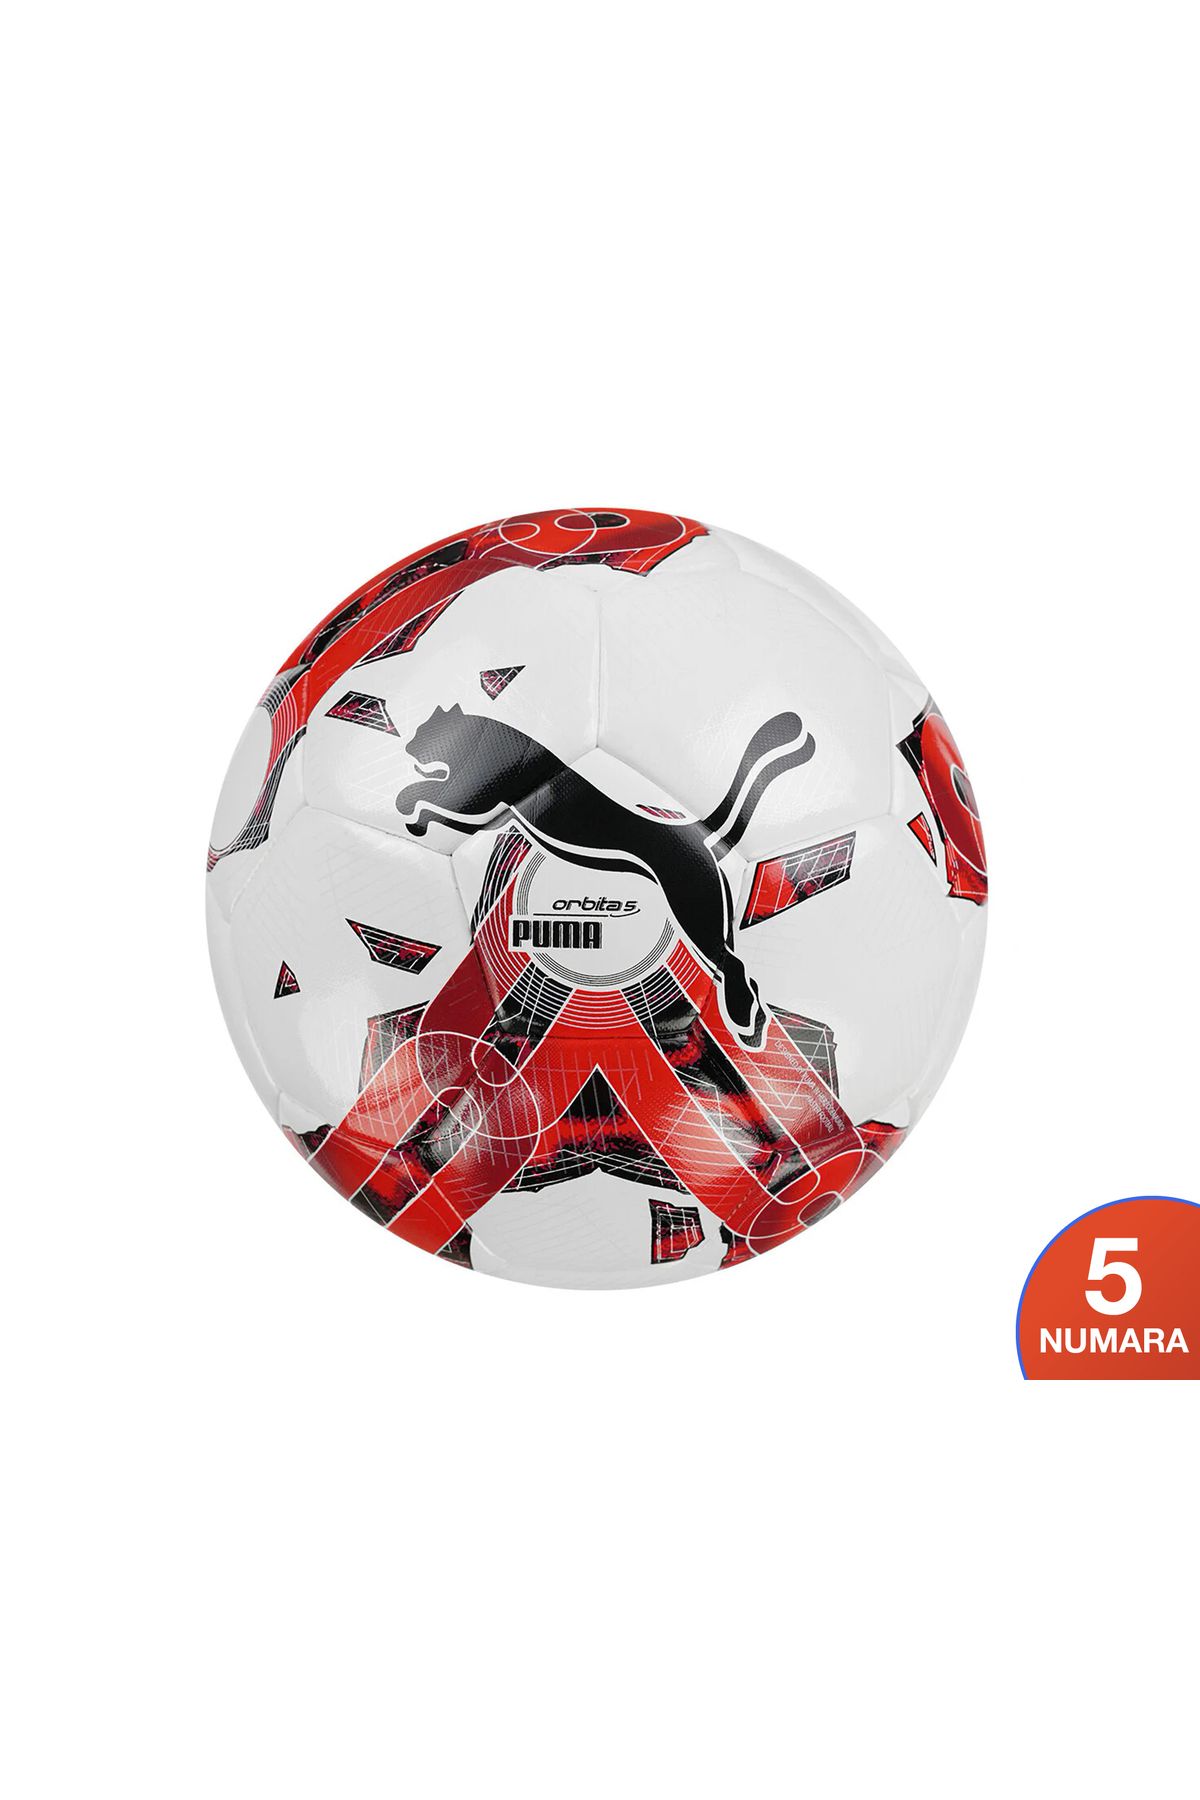 Puma Orbita 5 Hyb Futbol Topu Beyaz Kırmızı